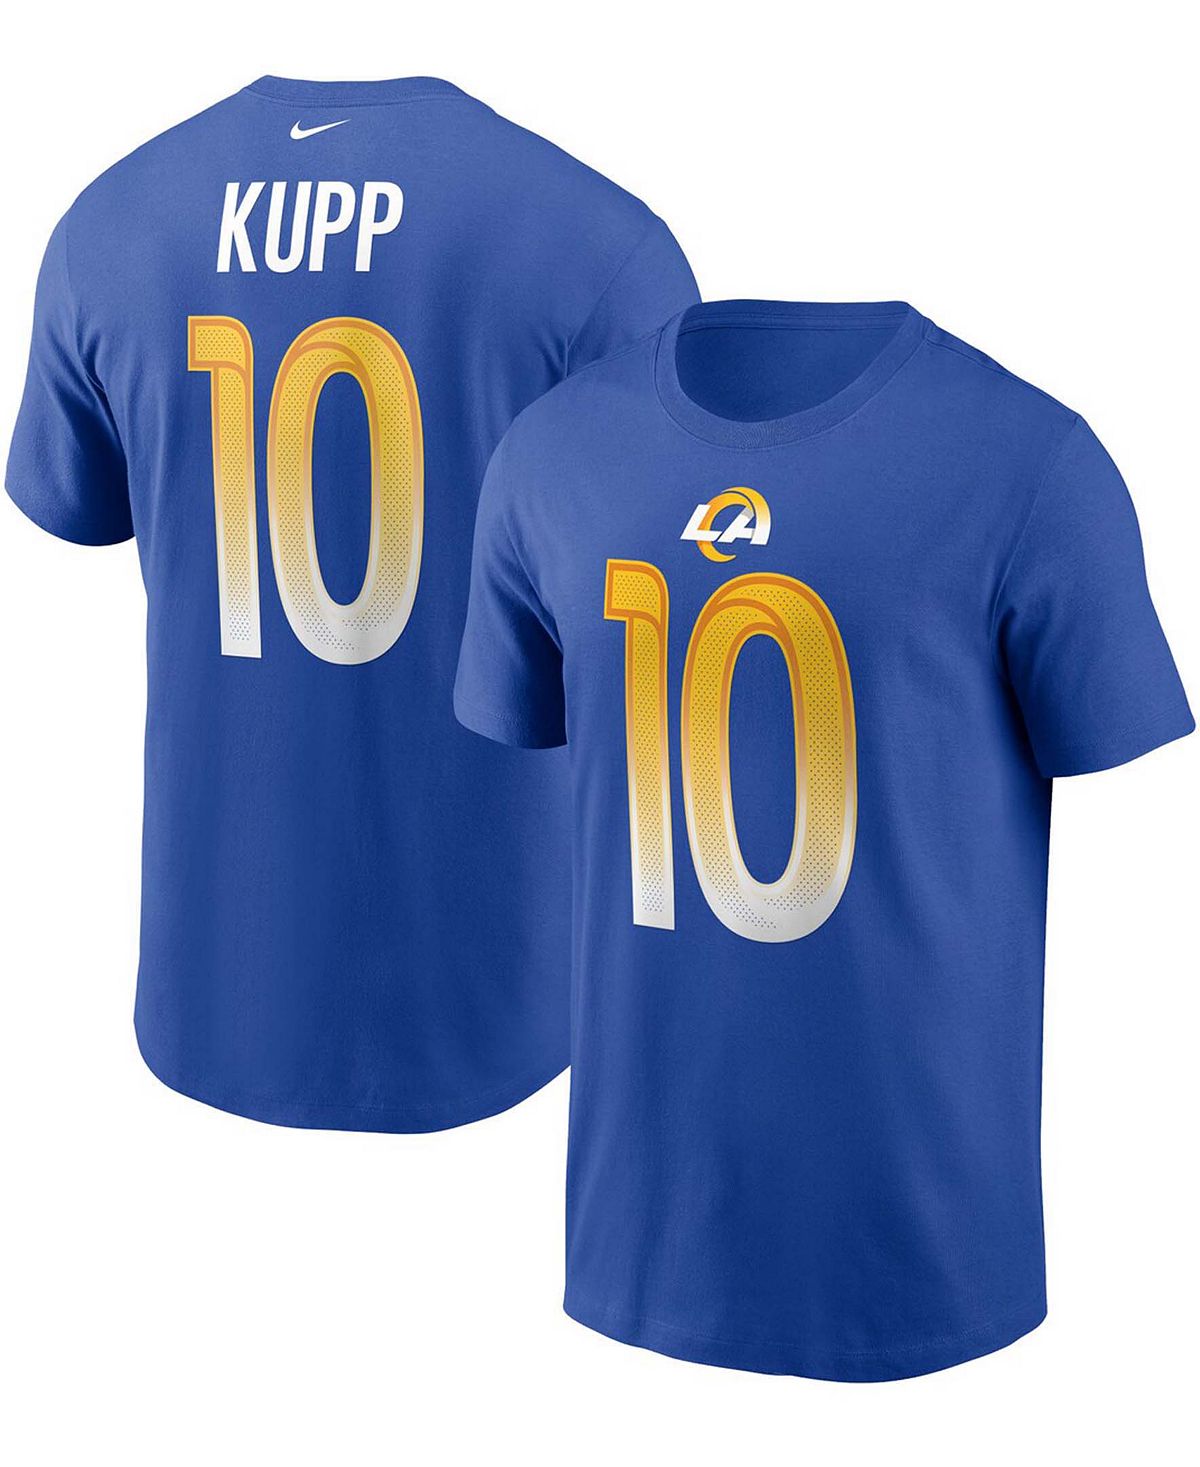 Мужская футболка Cooper Kupp Royal Los Angeles Rams с именем и номером Nike